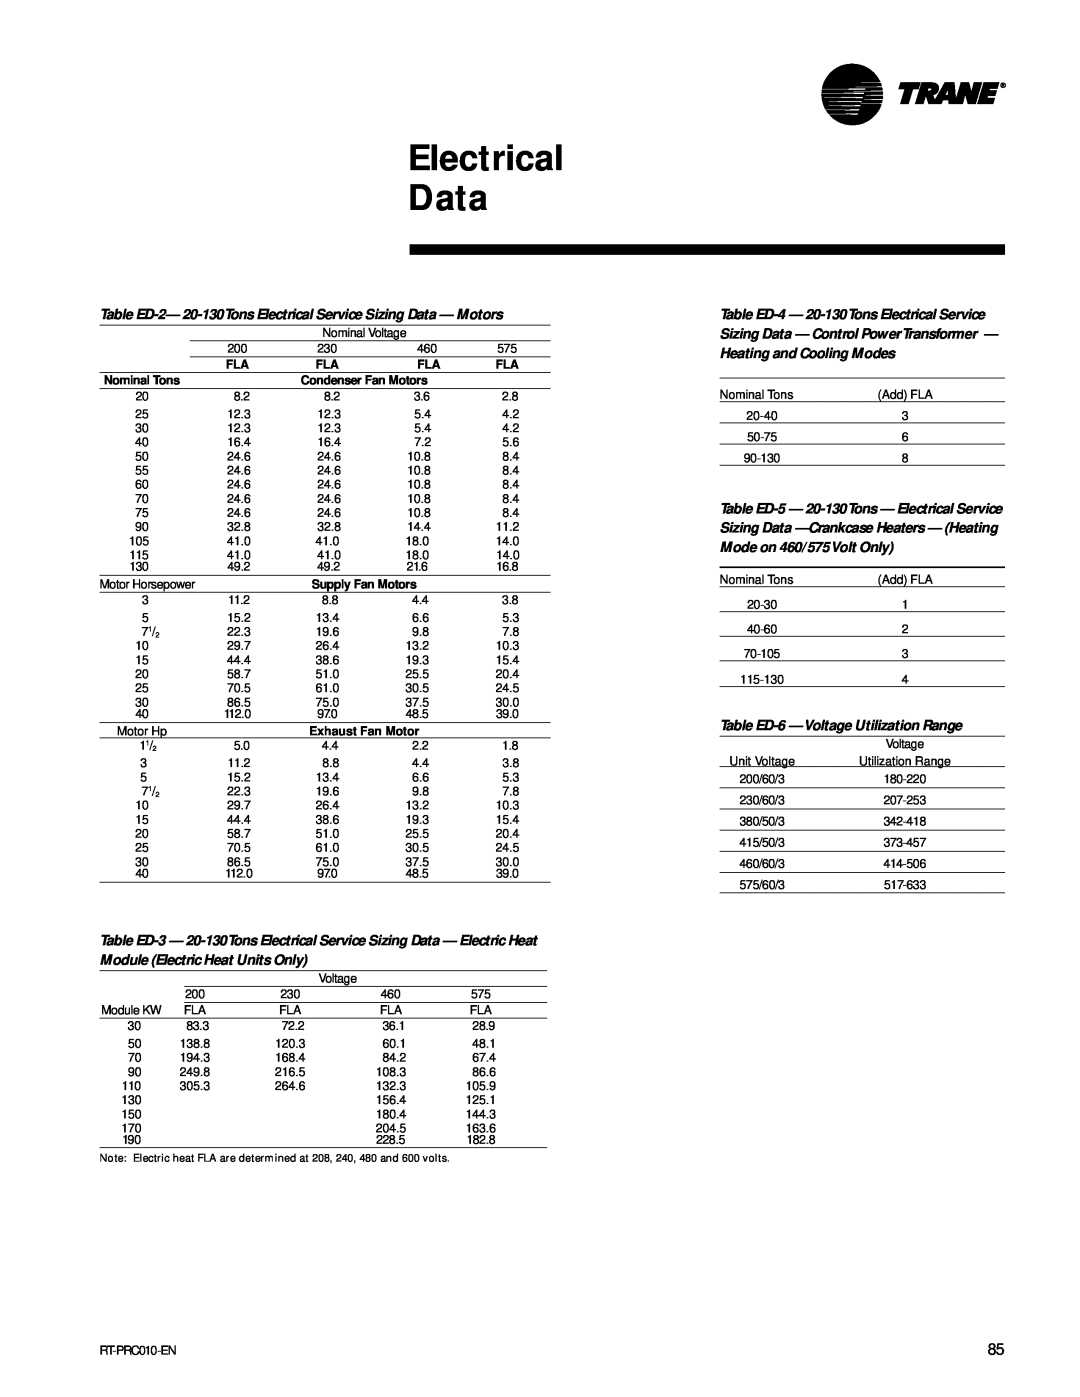 Trane RT-PRC010-EN manual Electrical Data, Table ED-6 —VoltageUtilization Range 